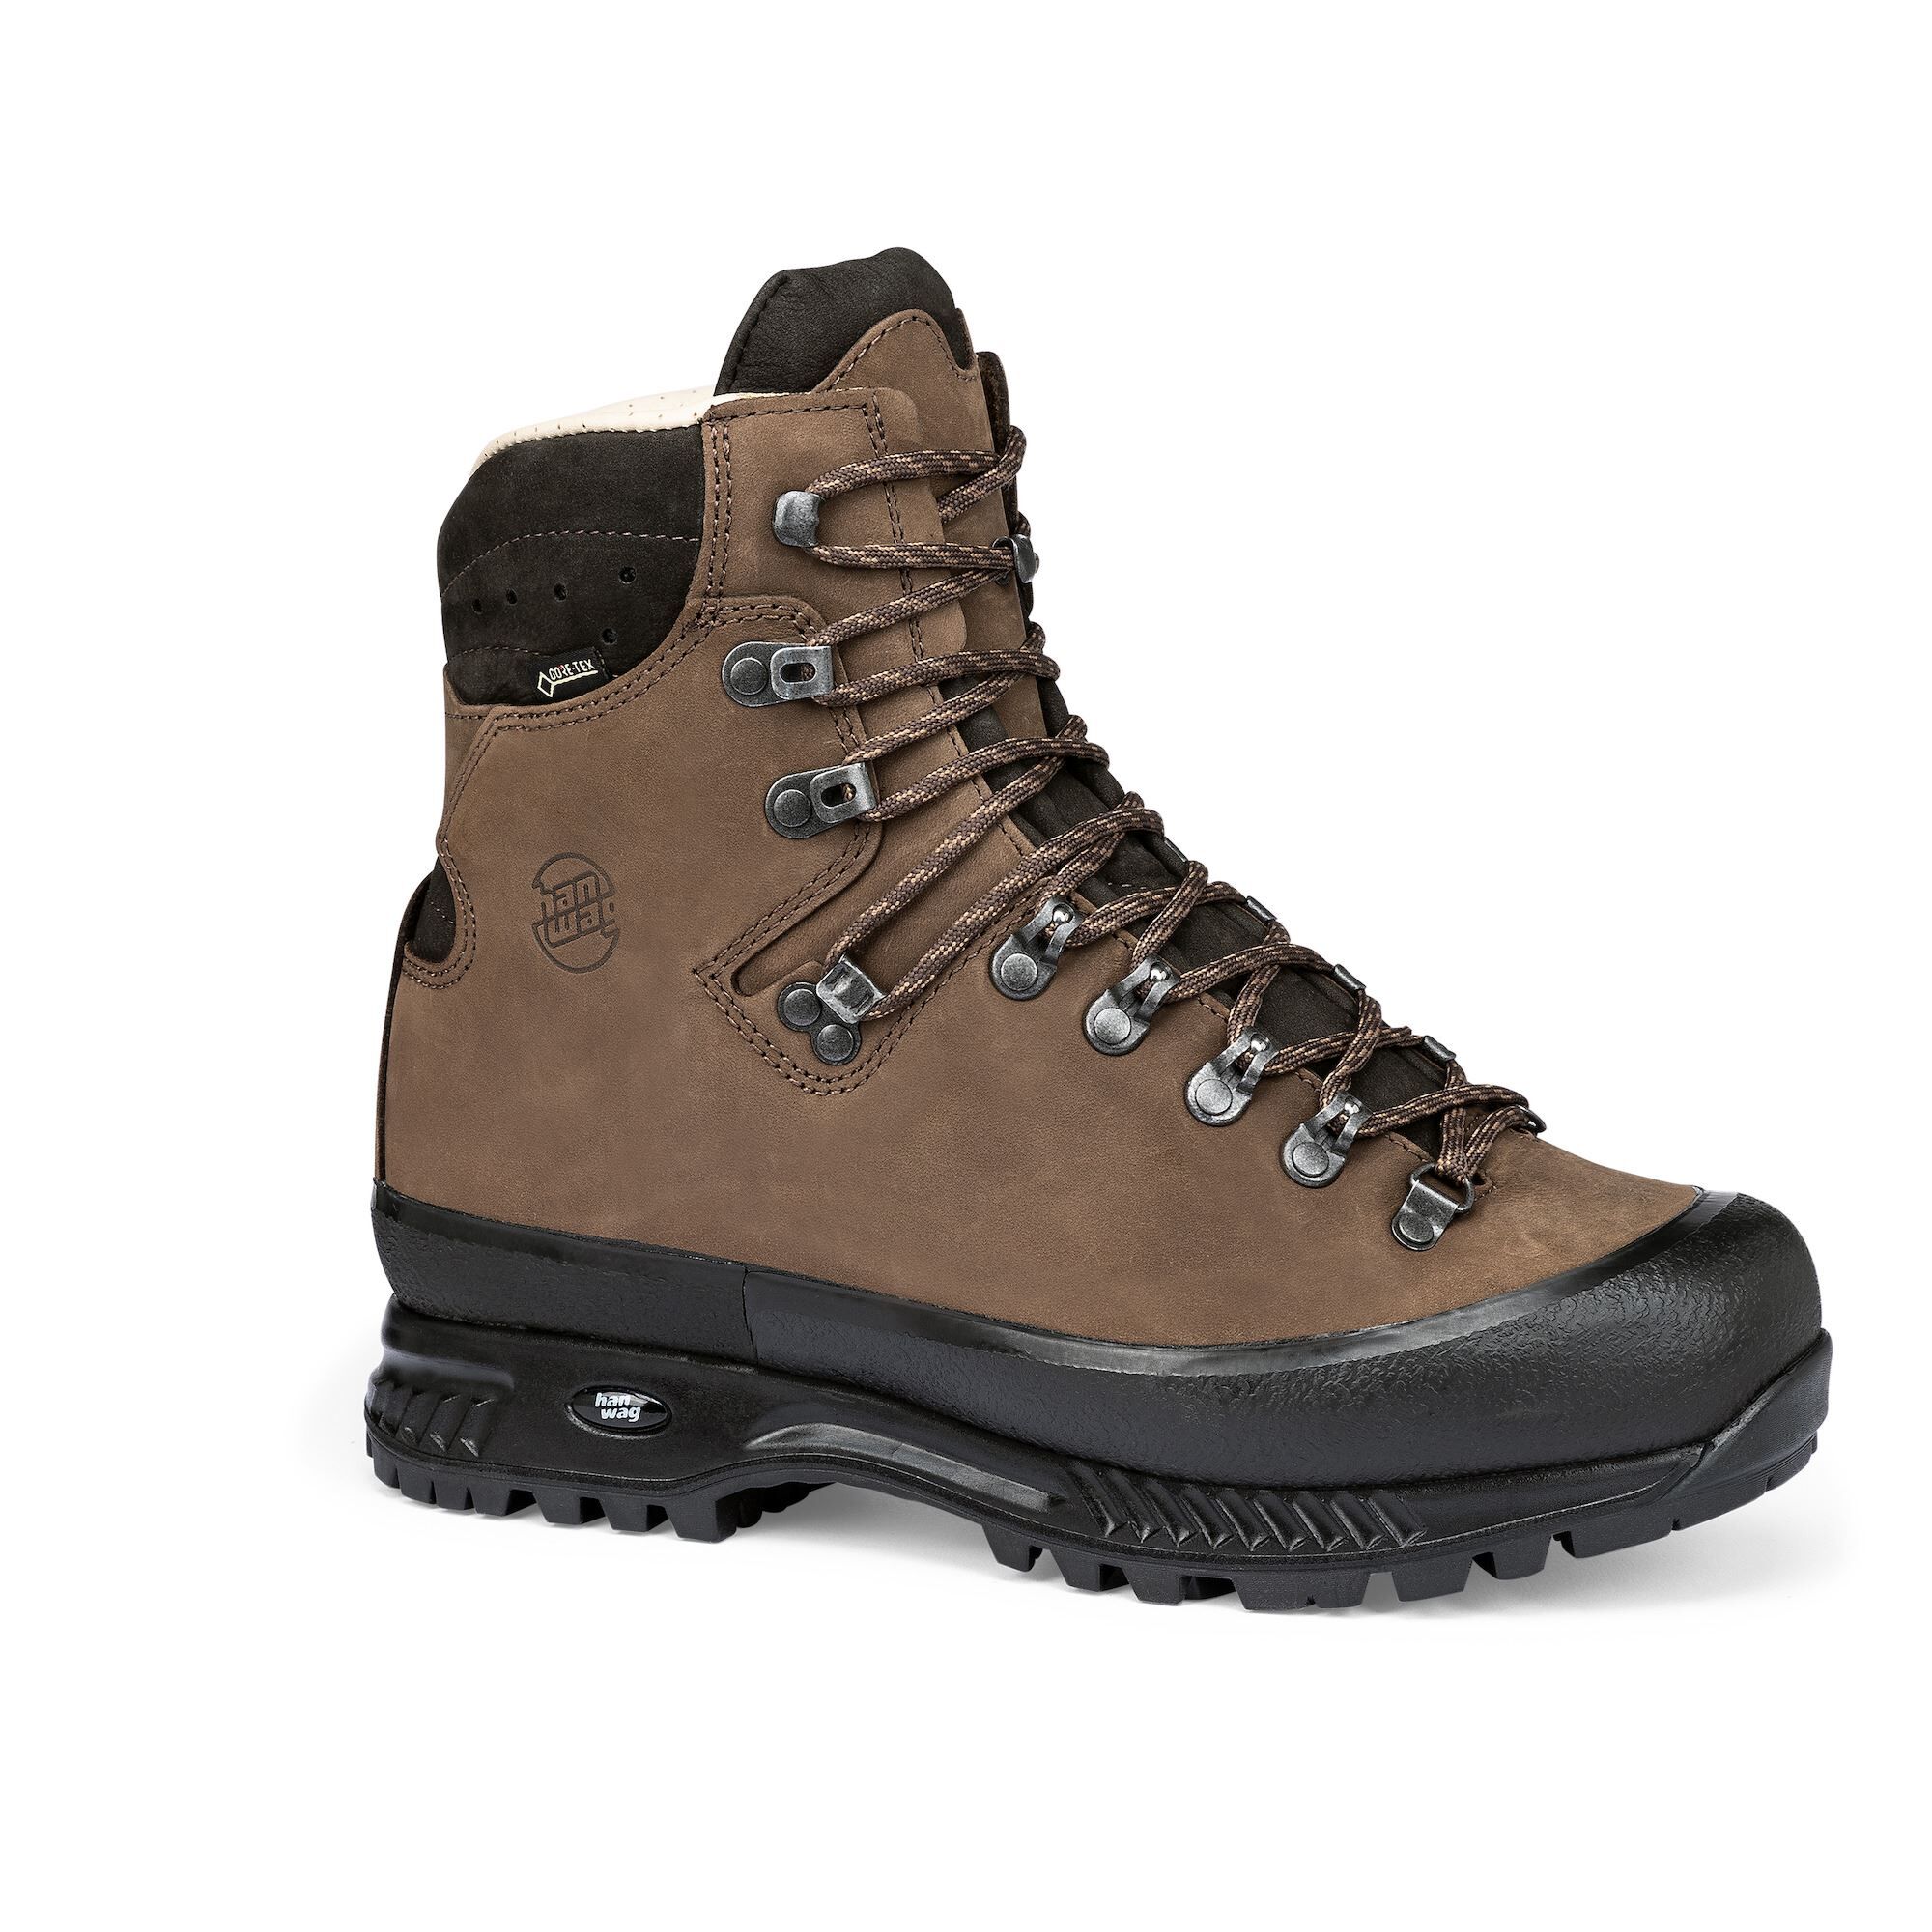 Hanwag Alaska Wide GTX - Hiking boots - Men's